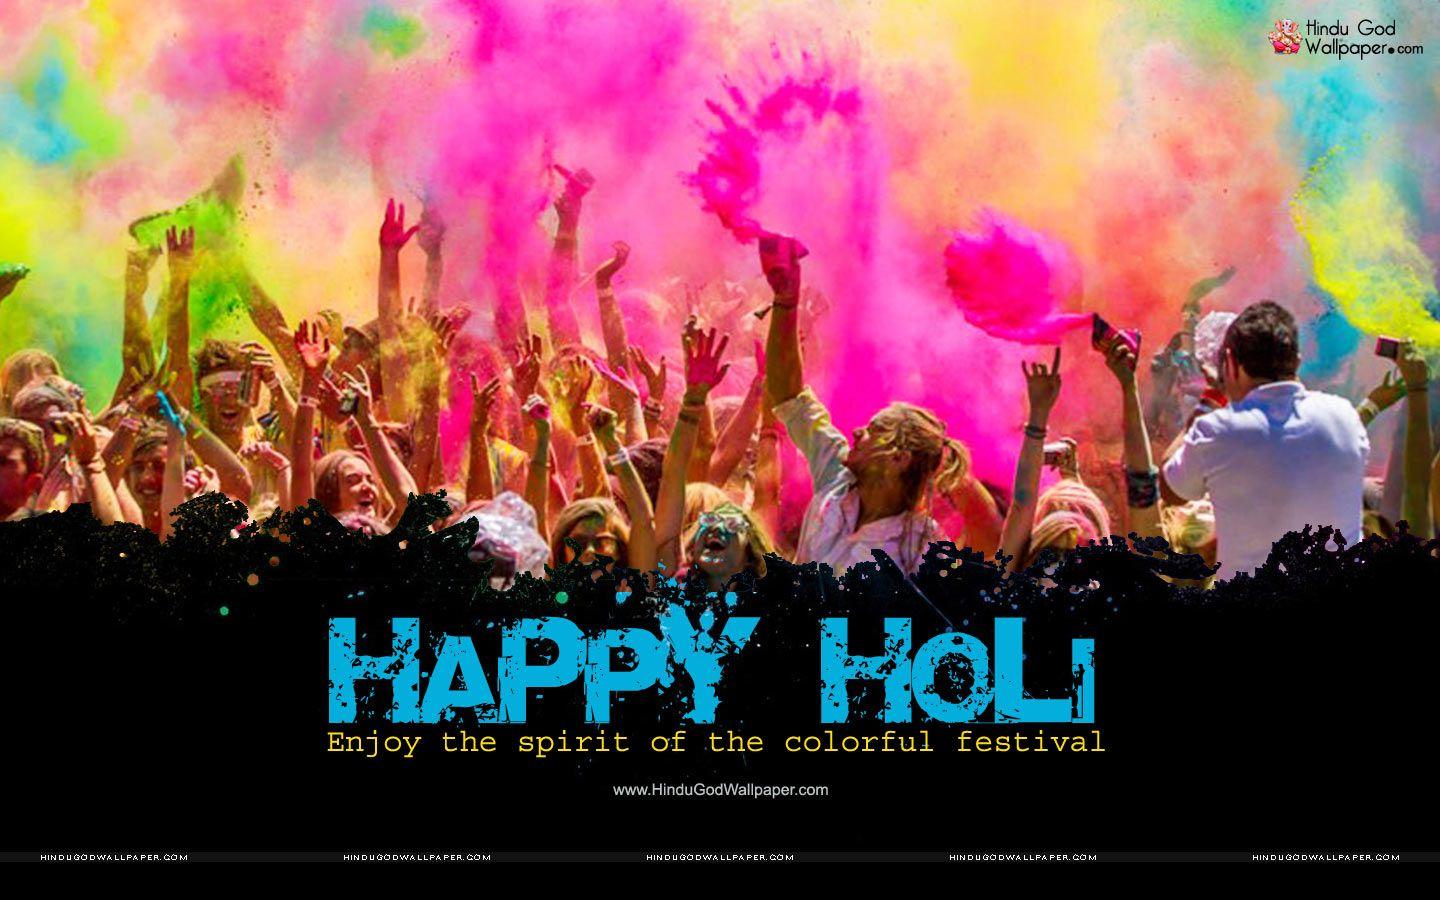 Creative Holi Wallpaper, Photo & Image Free Download. Holi